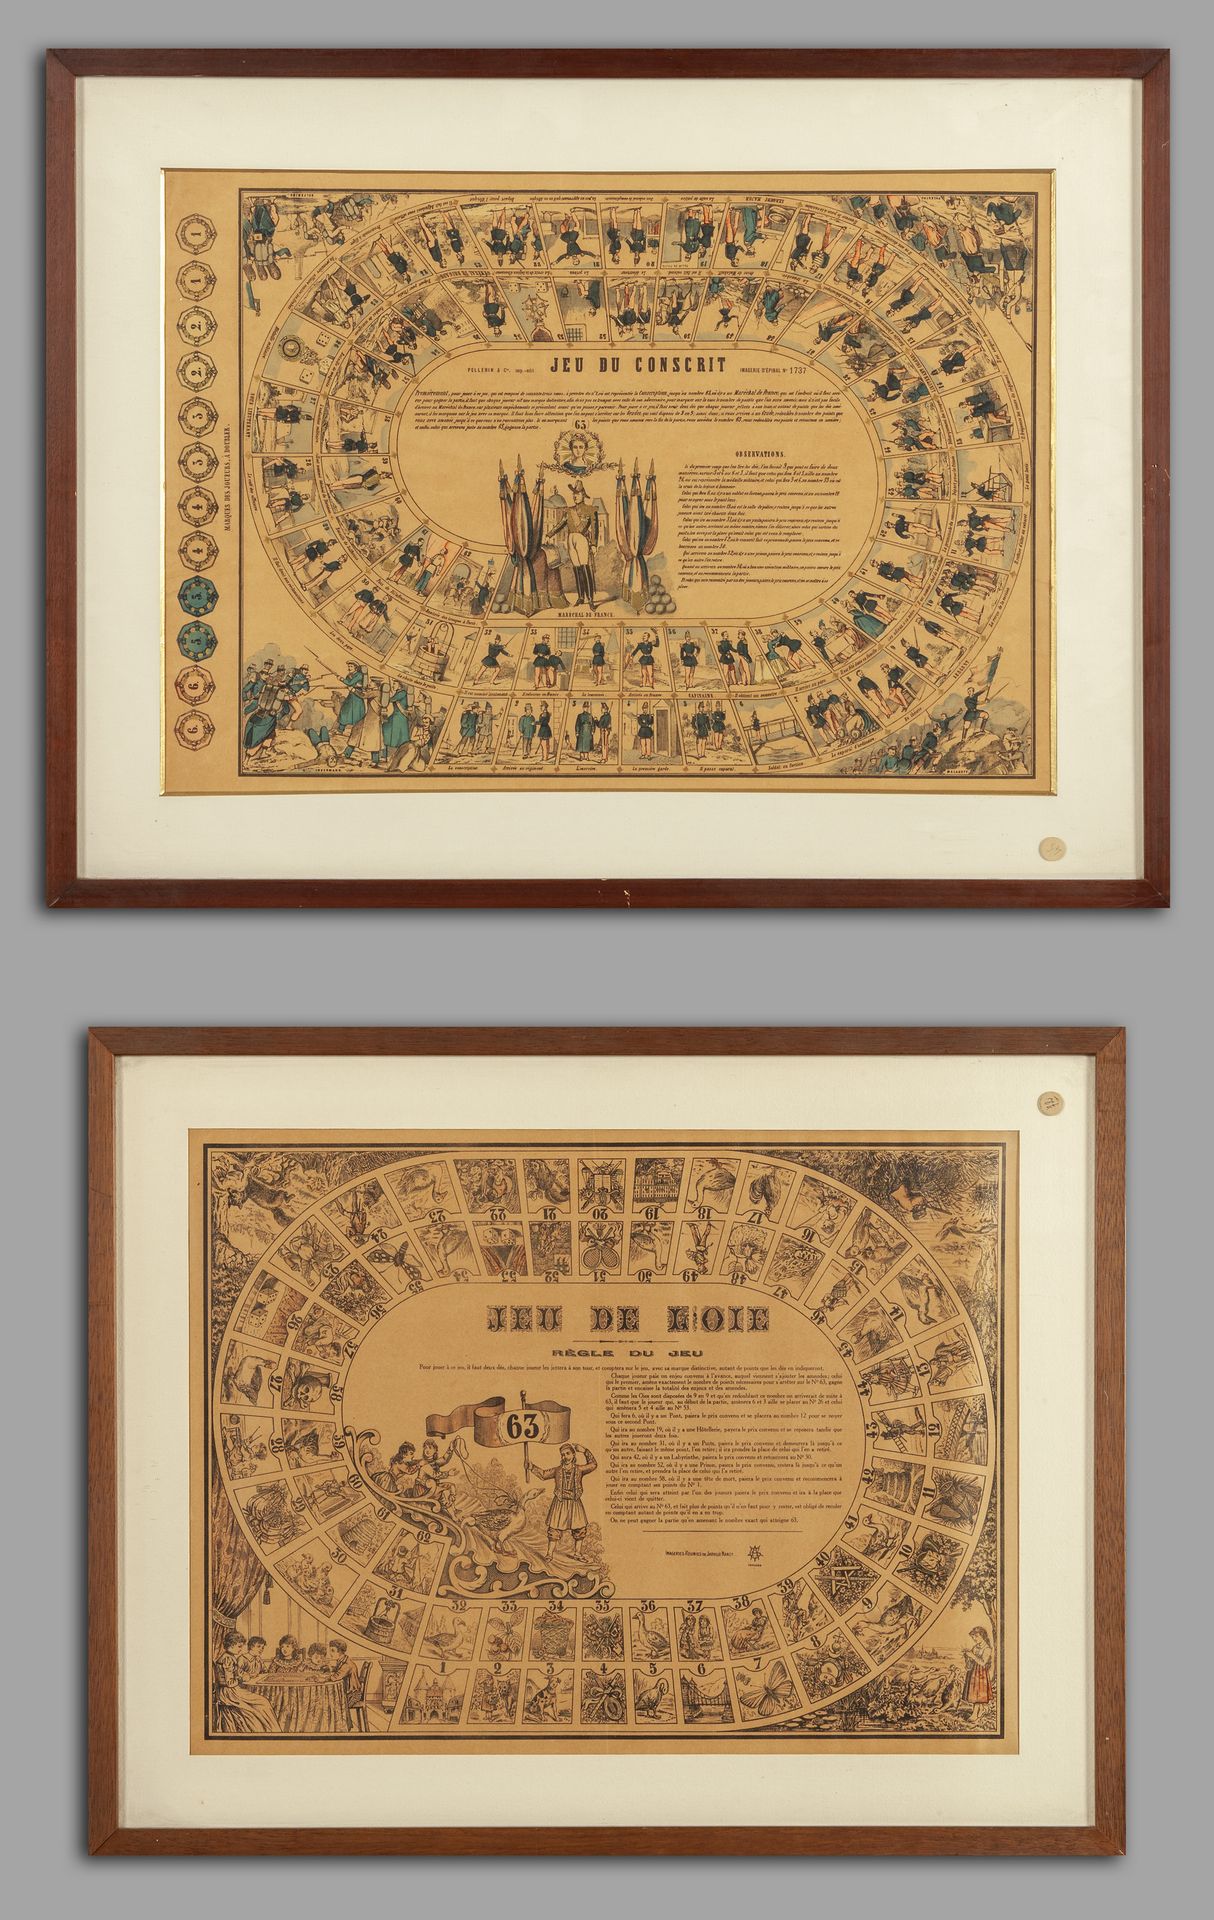 OGGETTISTICA Jeu du conscrit und Game of Goose zwei Stiche 19. Jahrhundert